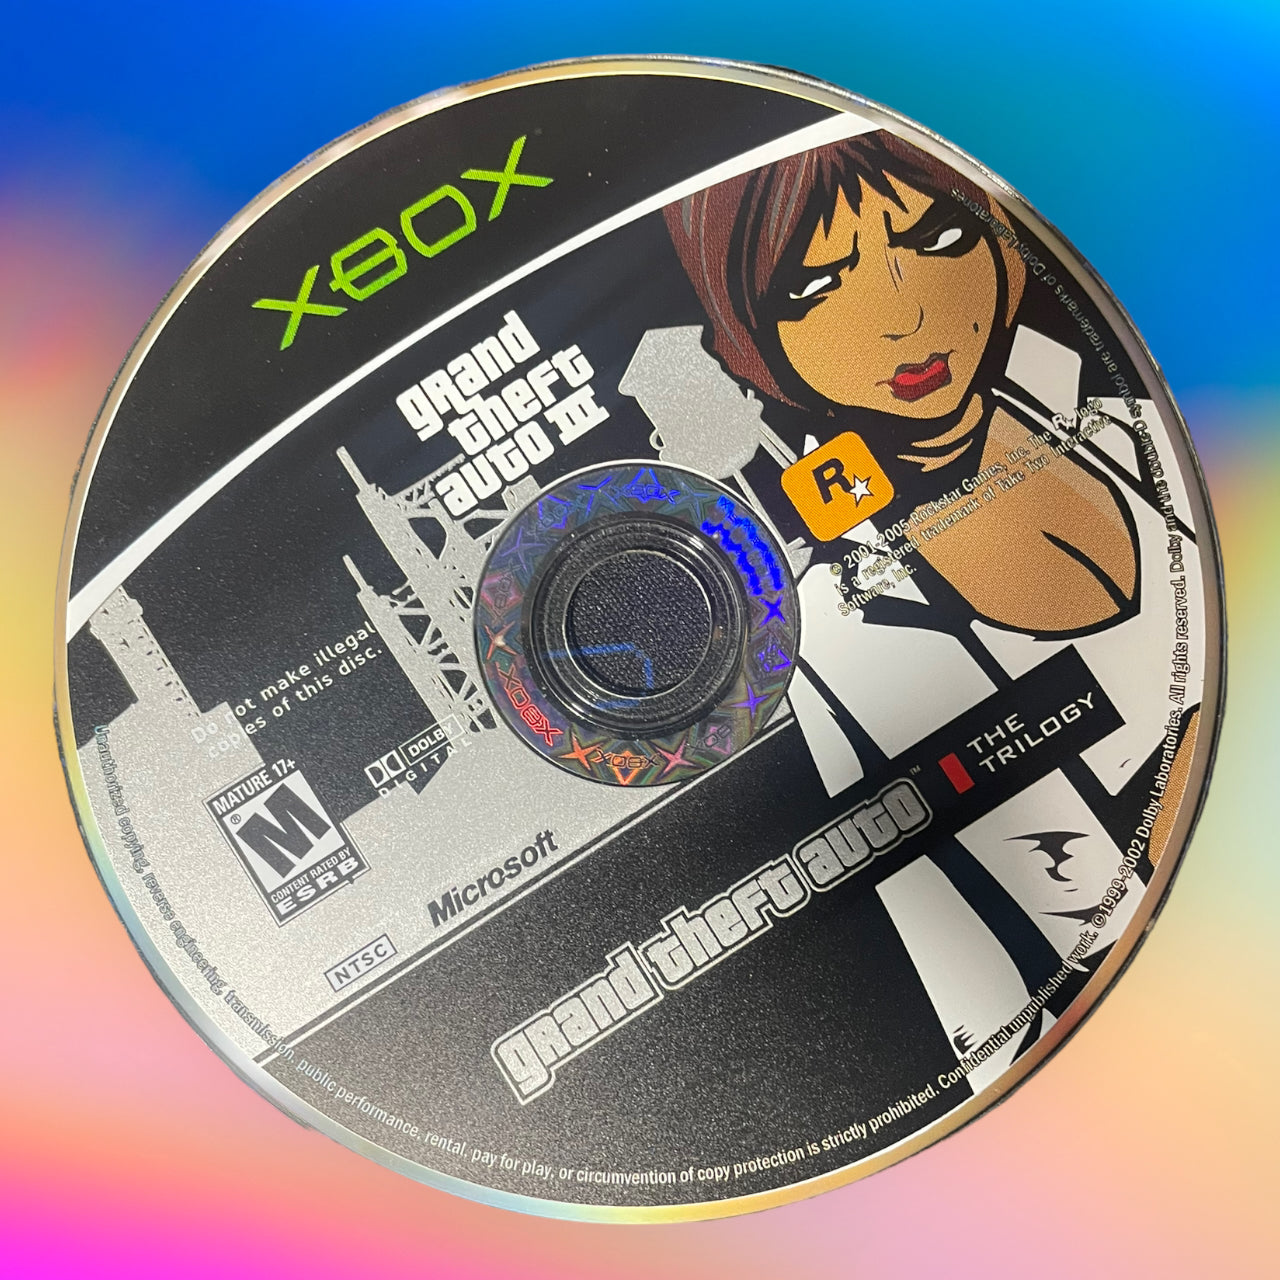 Grand Theft Auto III [Grand Theft Auto: The Trilogy] (Microsoft Xbox, 2005)